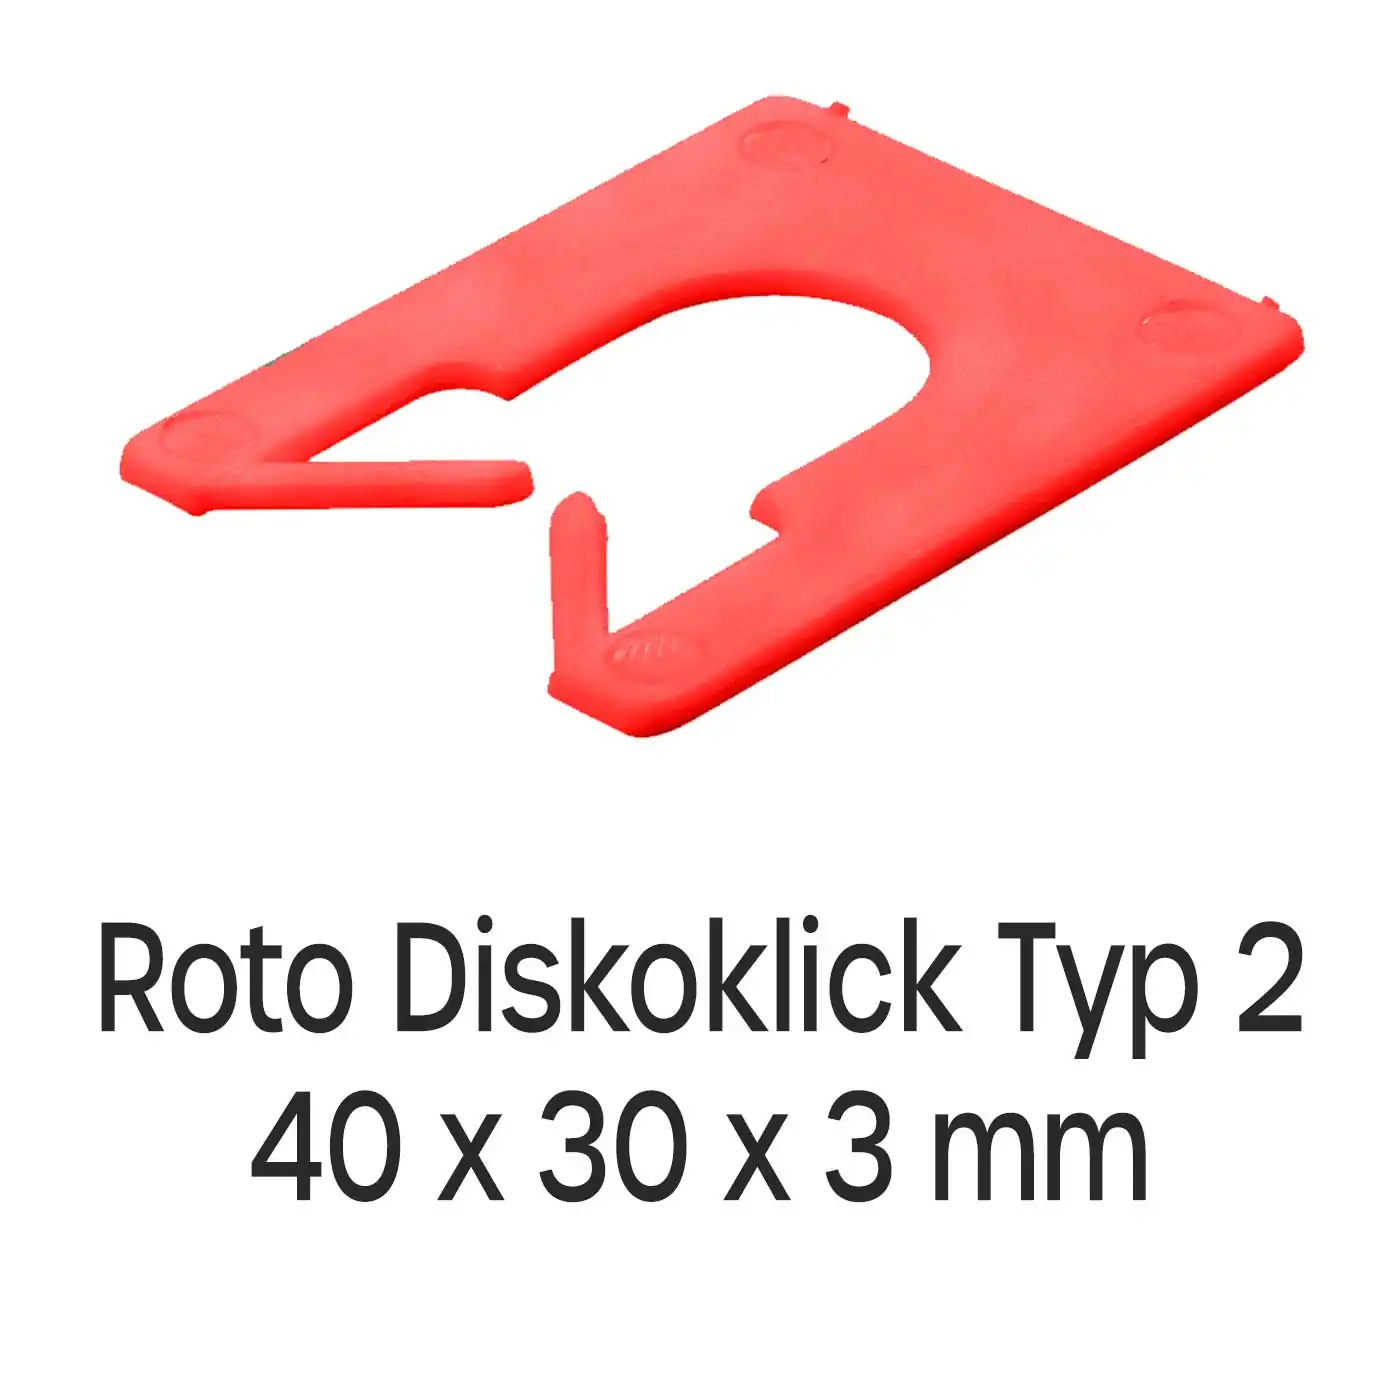 Distanzplatten Roto Diskoklick Typ 2 40 x 30 x 3 mm 1000 Stück